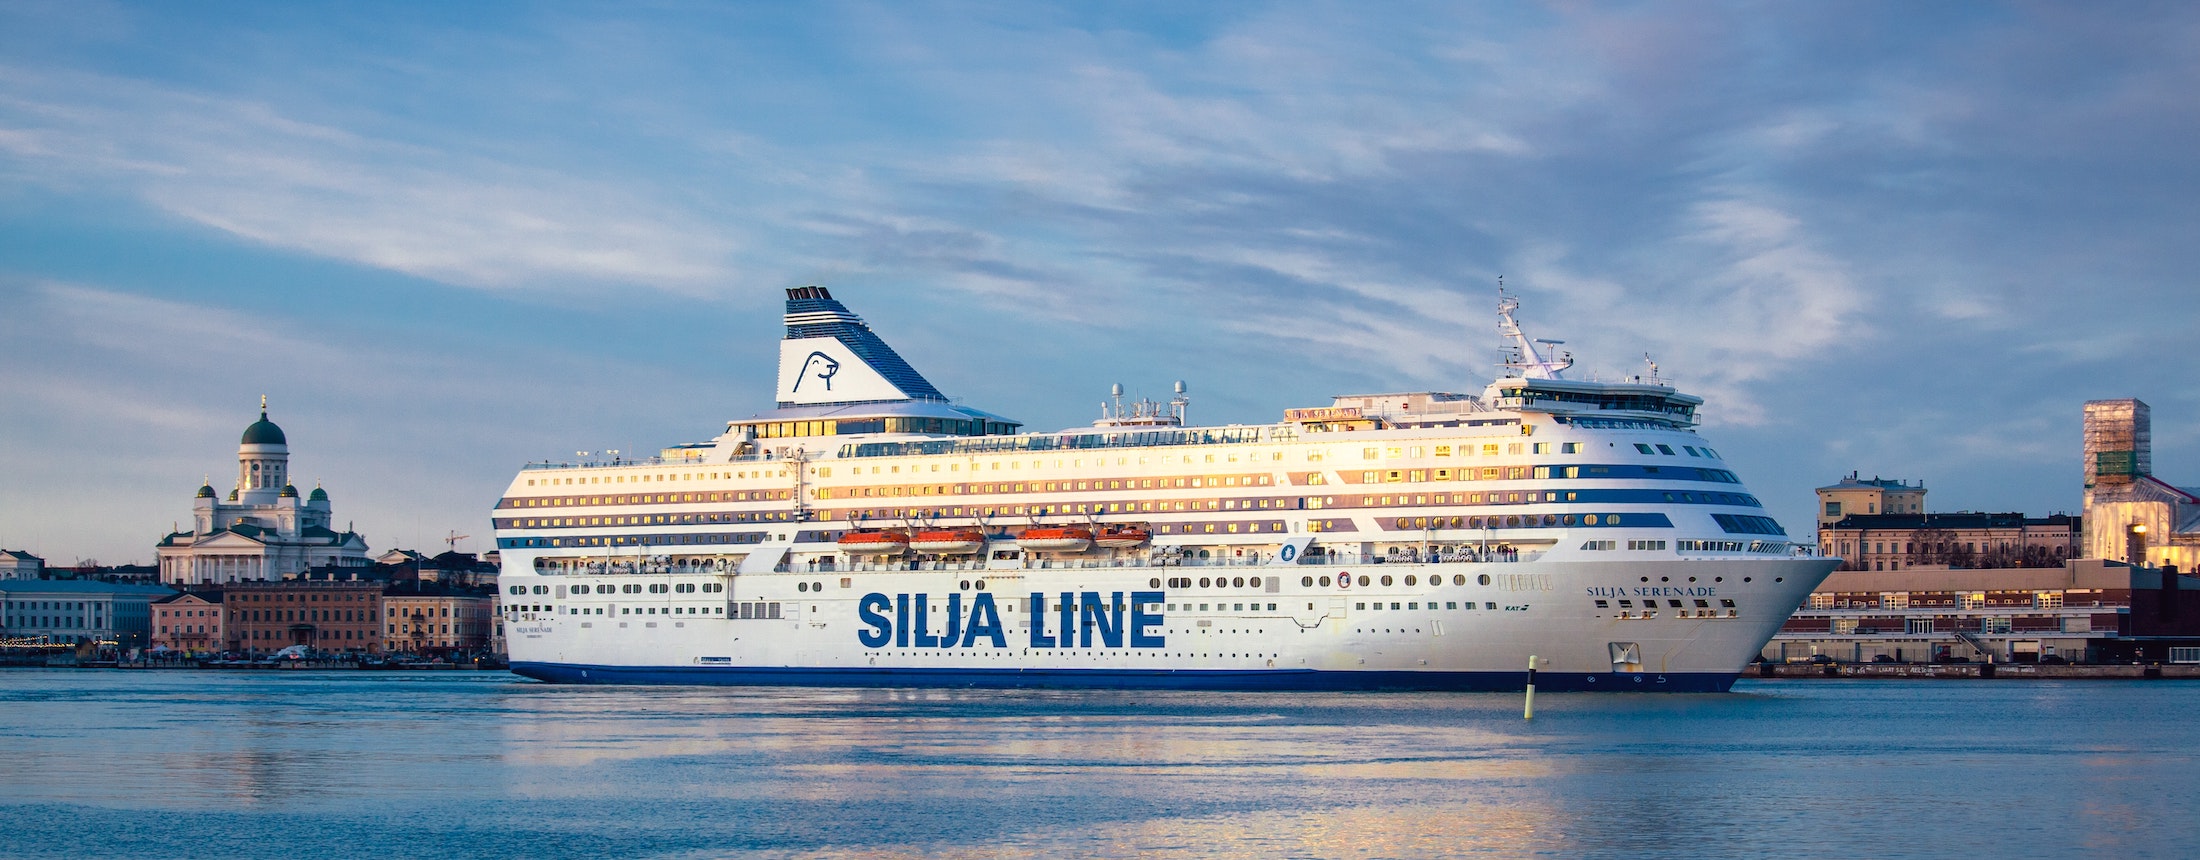 M/S Silja Serenade taking passengers and vehicles between Helsinki and Riga for summer 2020.